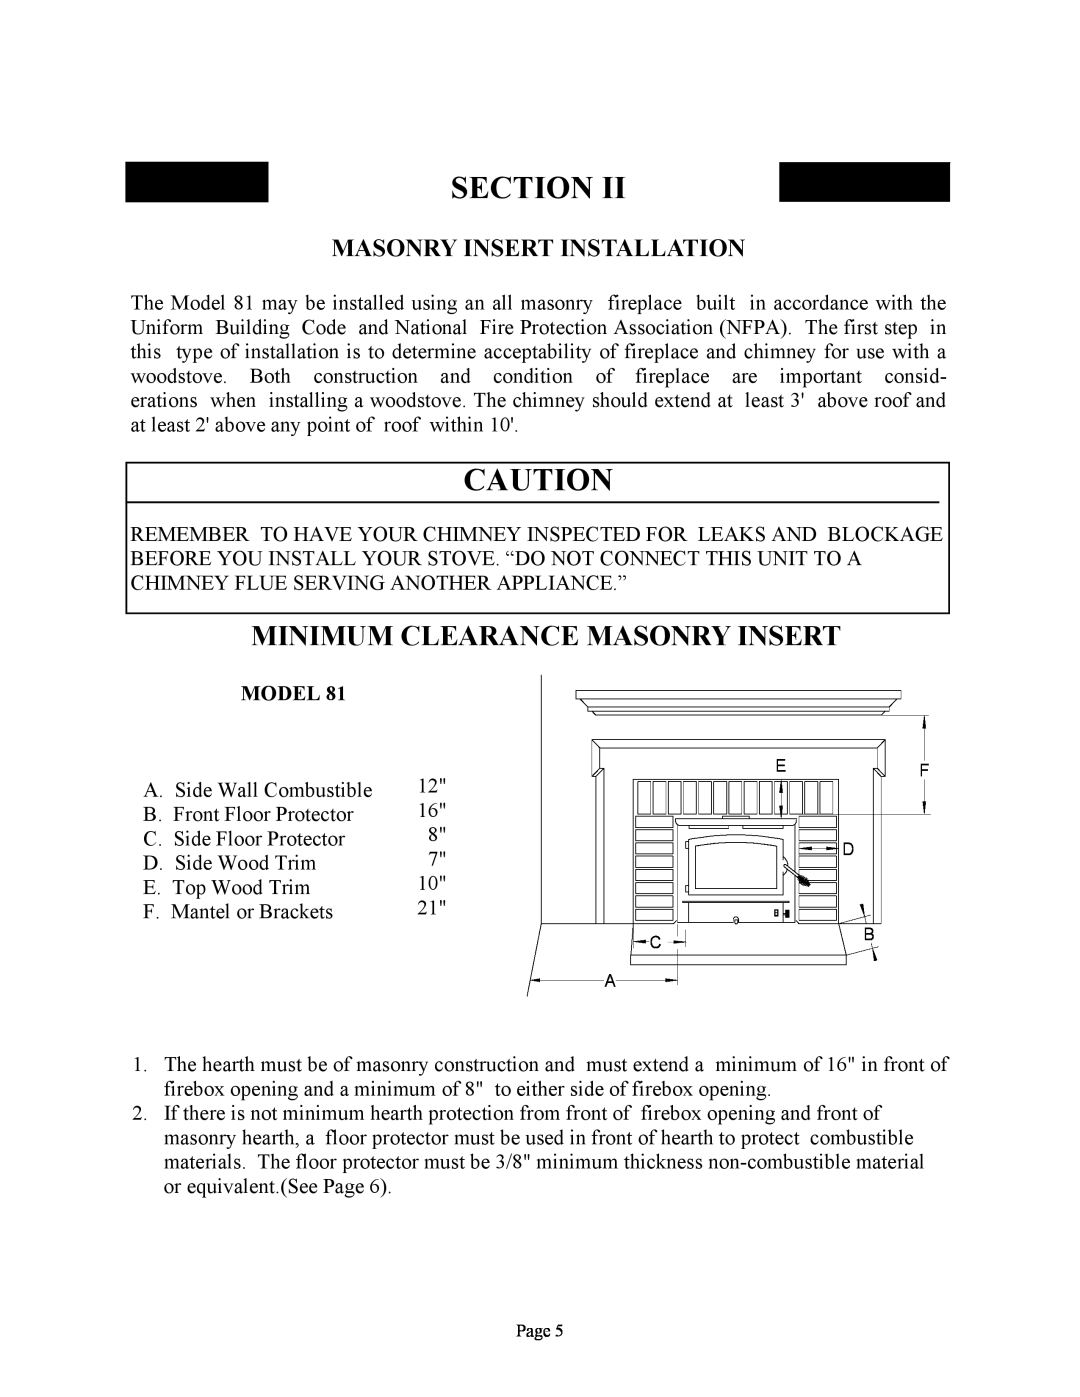 New Buck Corporation 81 installation instructions Minimum Clearance Masonry Insert, Masonry Insert Installation, Section 